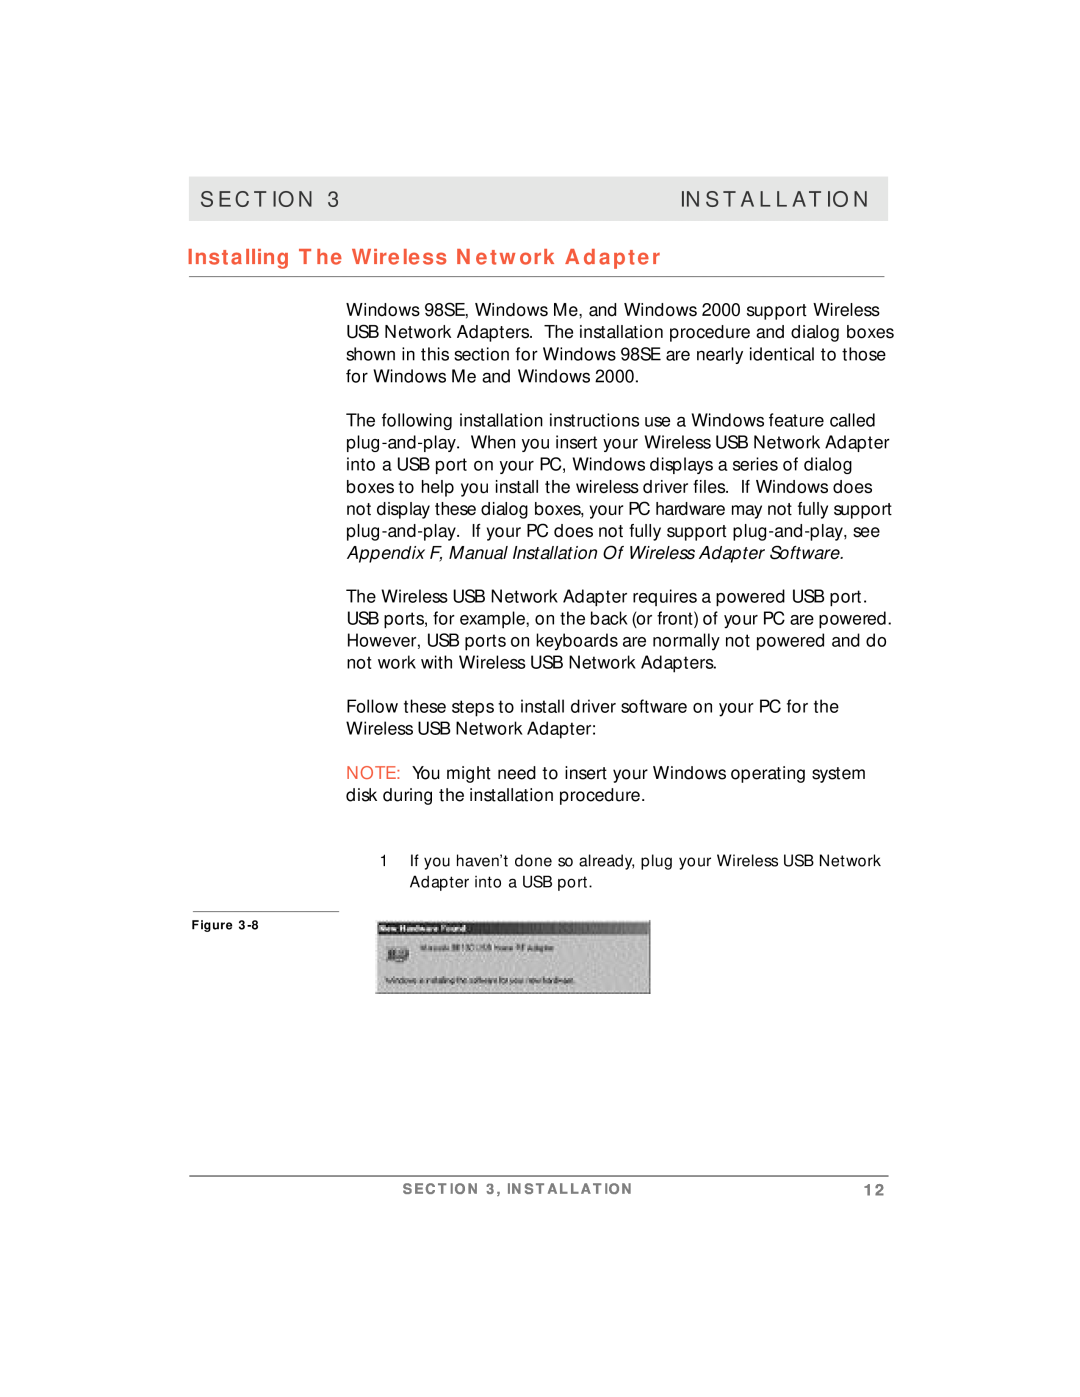 Motorola simplefi manual Installing The Wireless Network Adapter, Section, Installation 